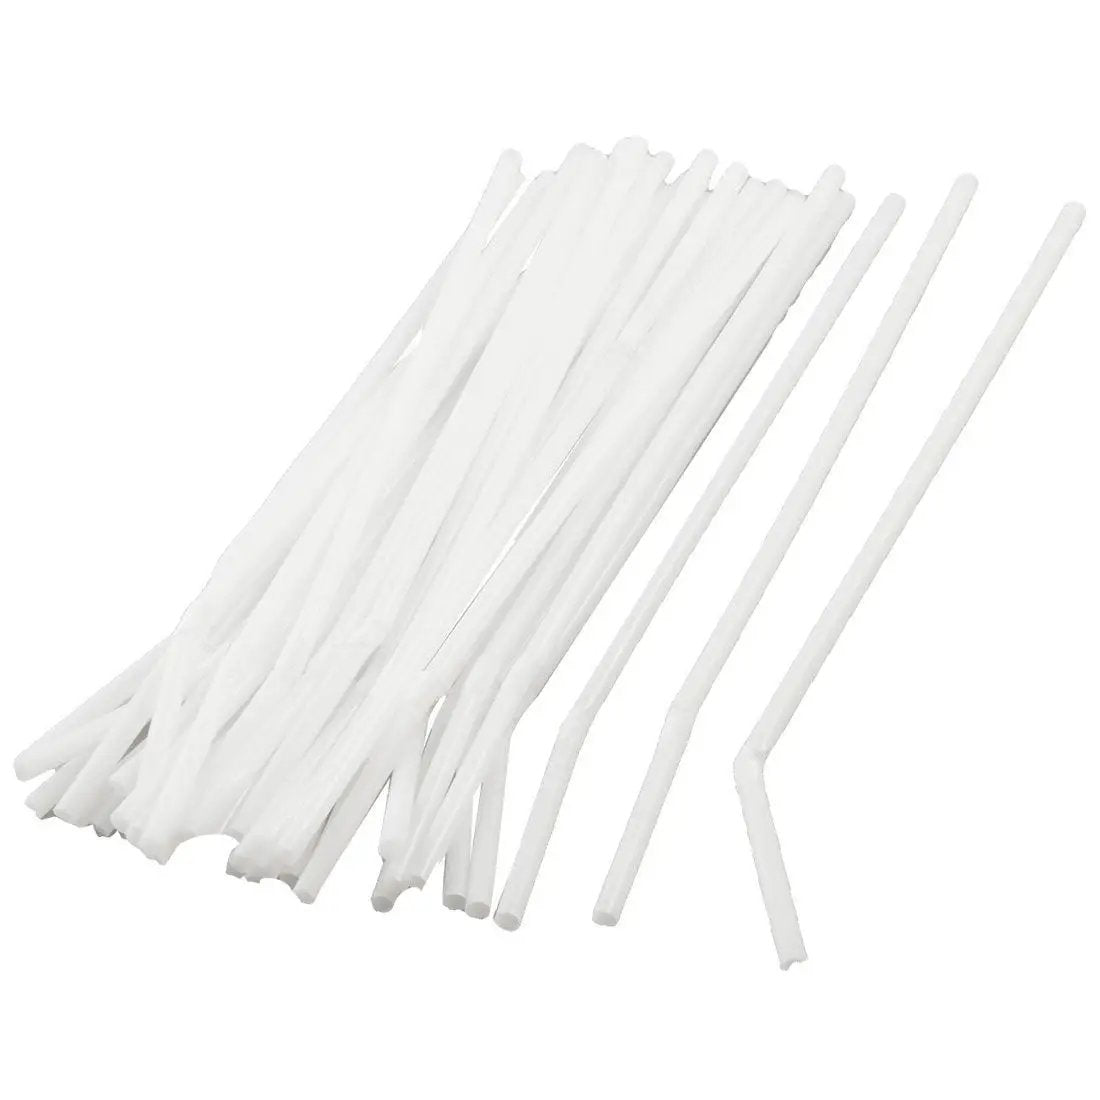 Flexible White Disposable Drinking Straws, box of 400